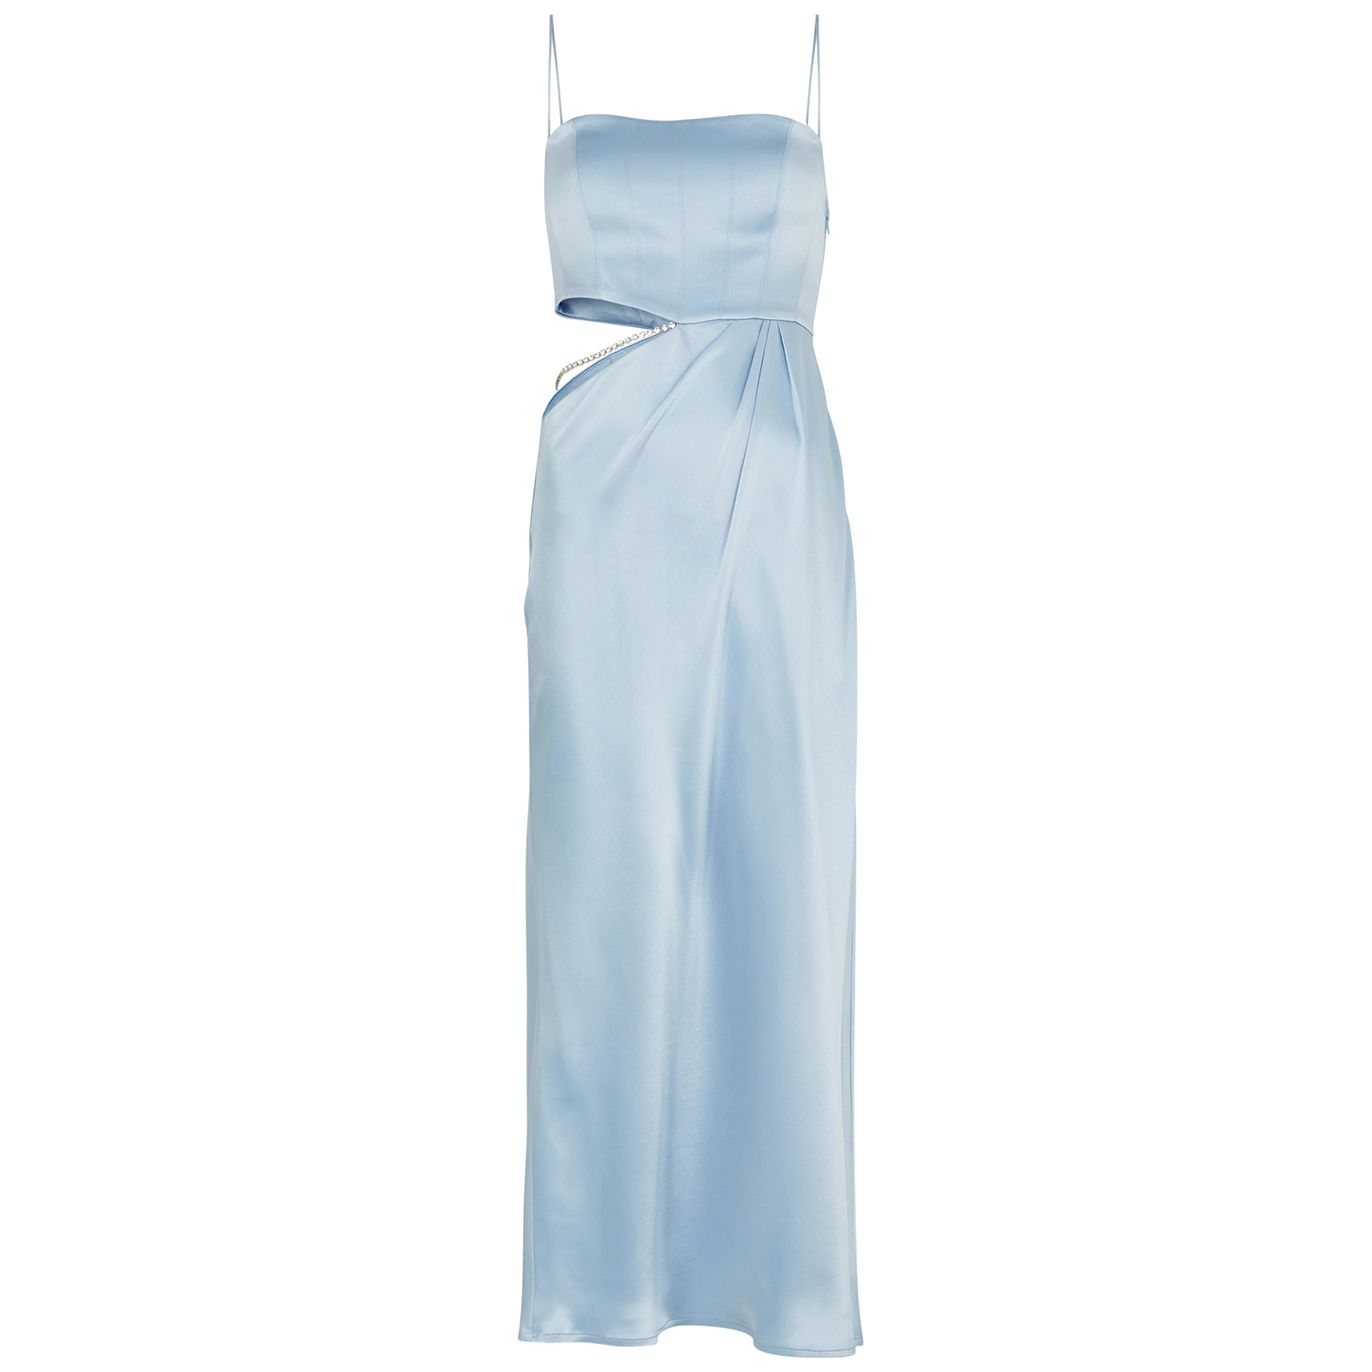 Nafsika Skourti Carla Blue Cut-out Satin Dress - Light Blue - 10 | Harvey Nichols (Global)